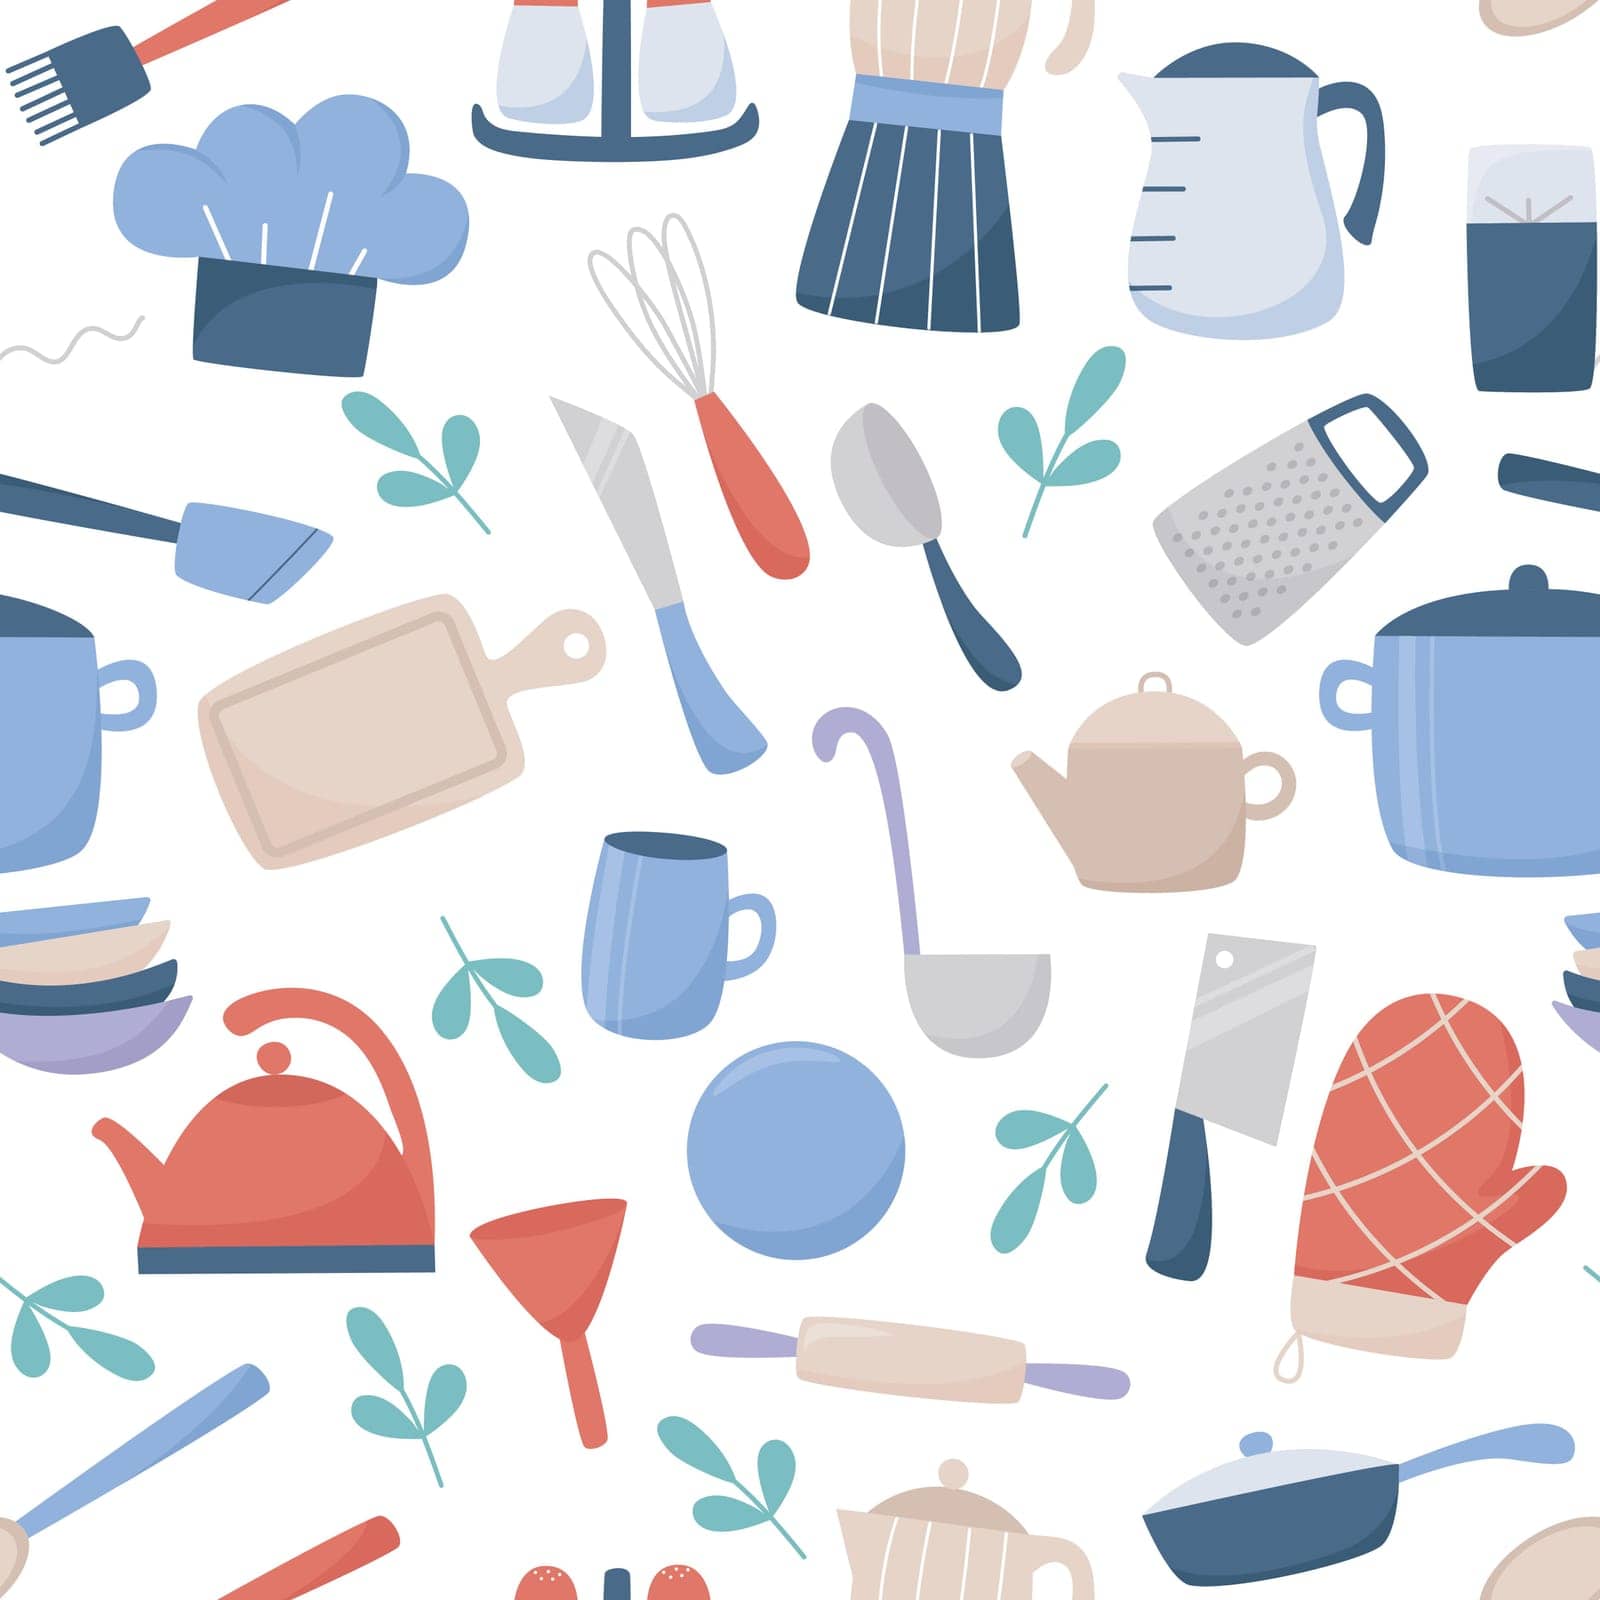 Kitchenware and utensils seamless pattern by TassiaK